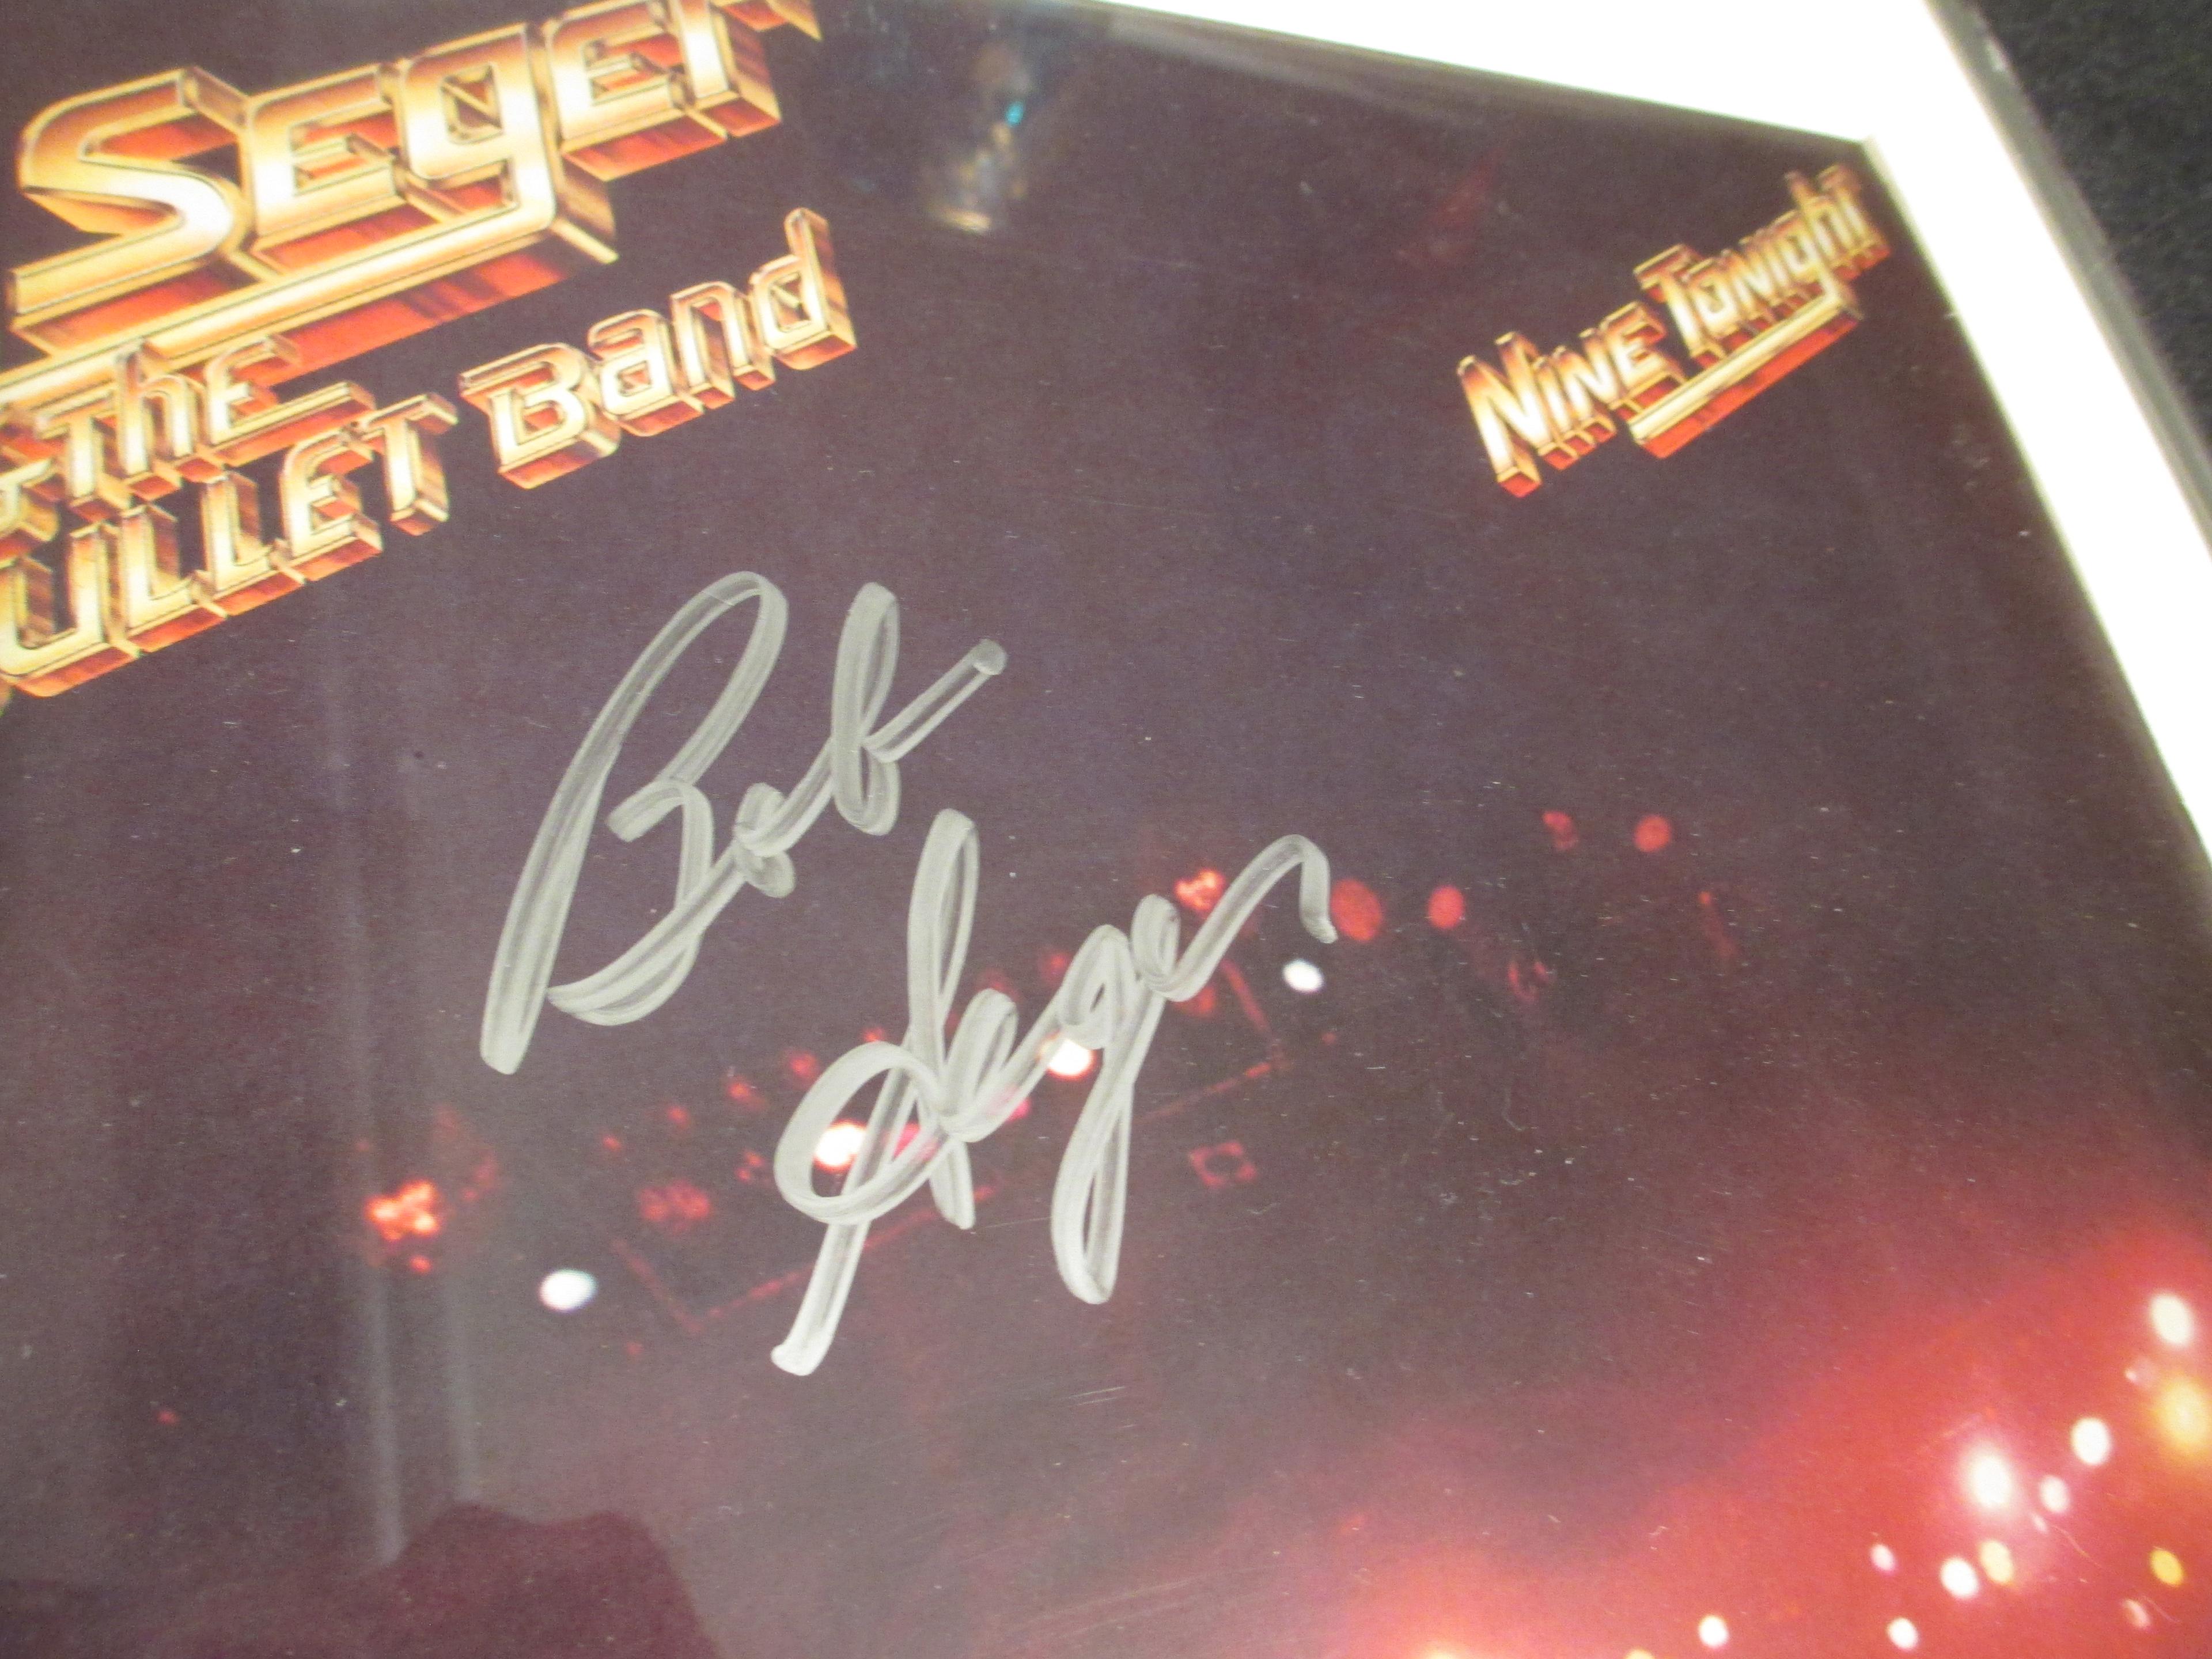 Bob Seger & The Silver Bullet Band Autographed 'Nine Tonight' Framed Album Cover